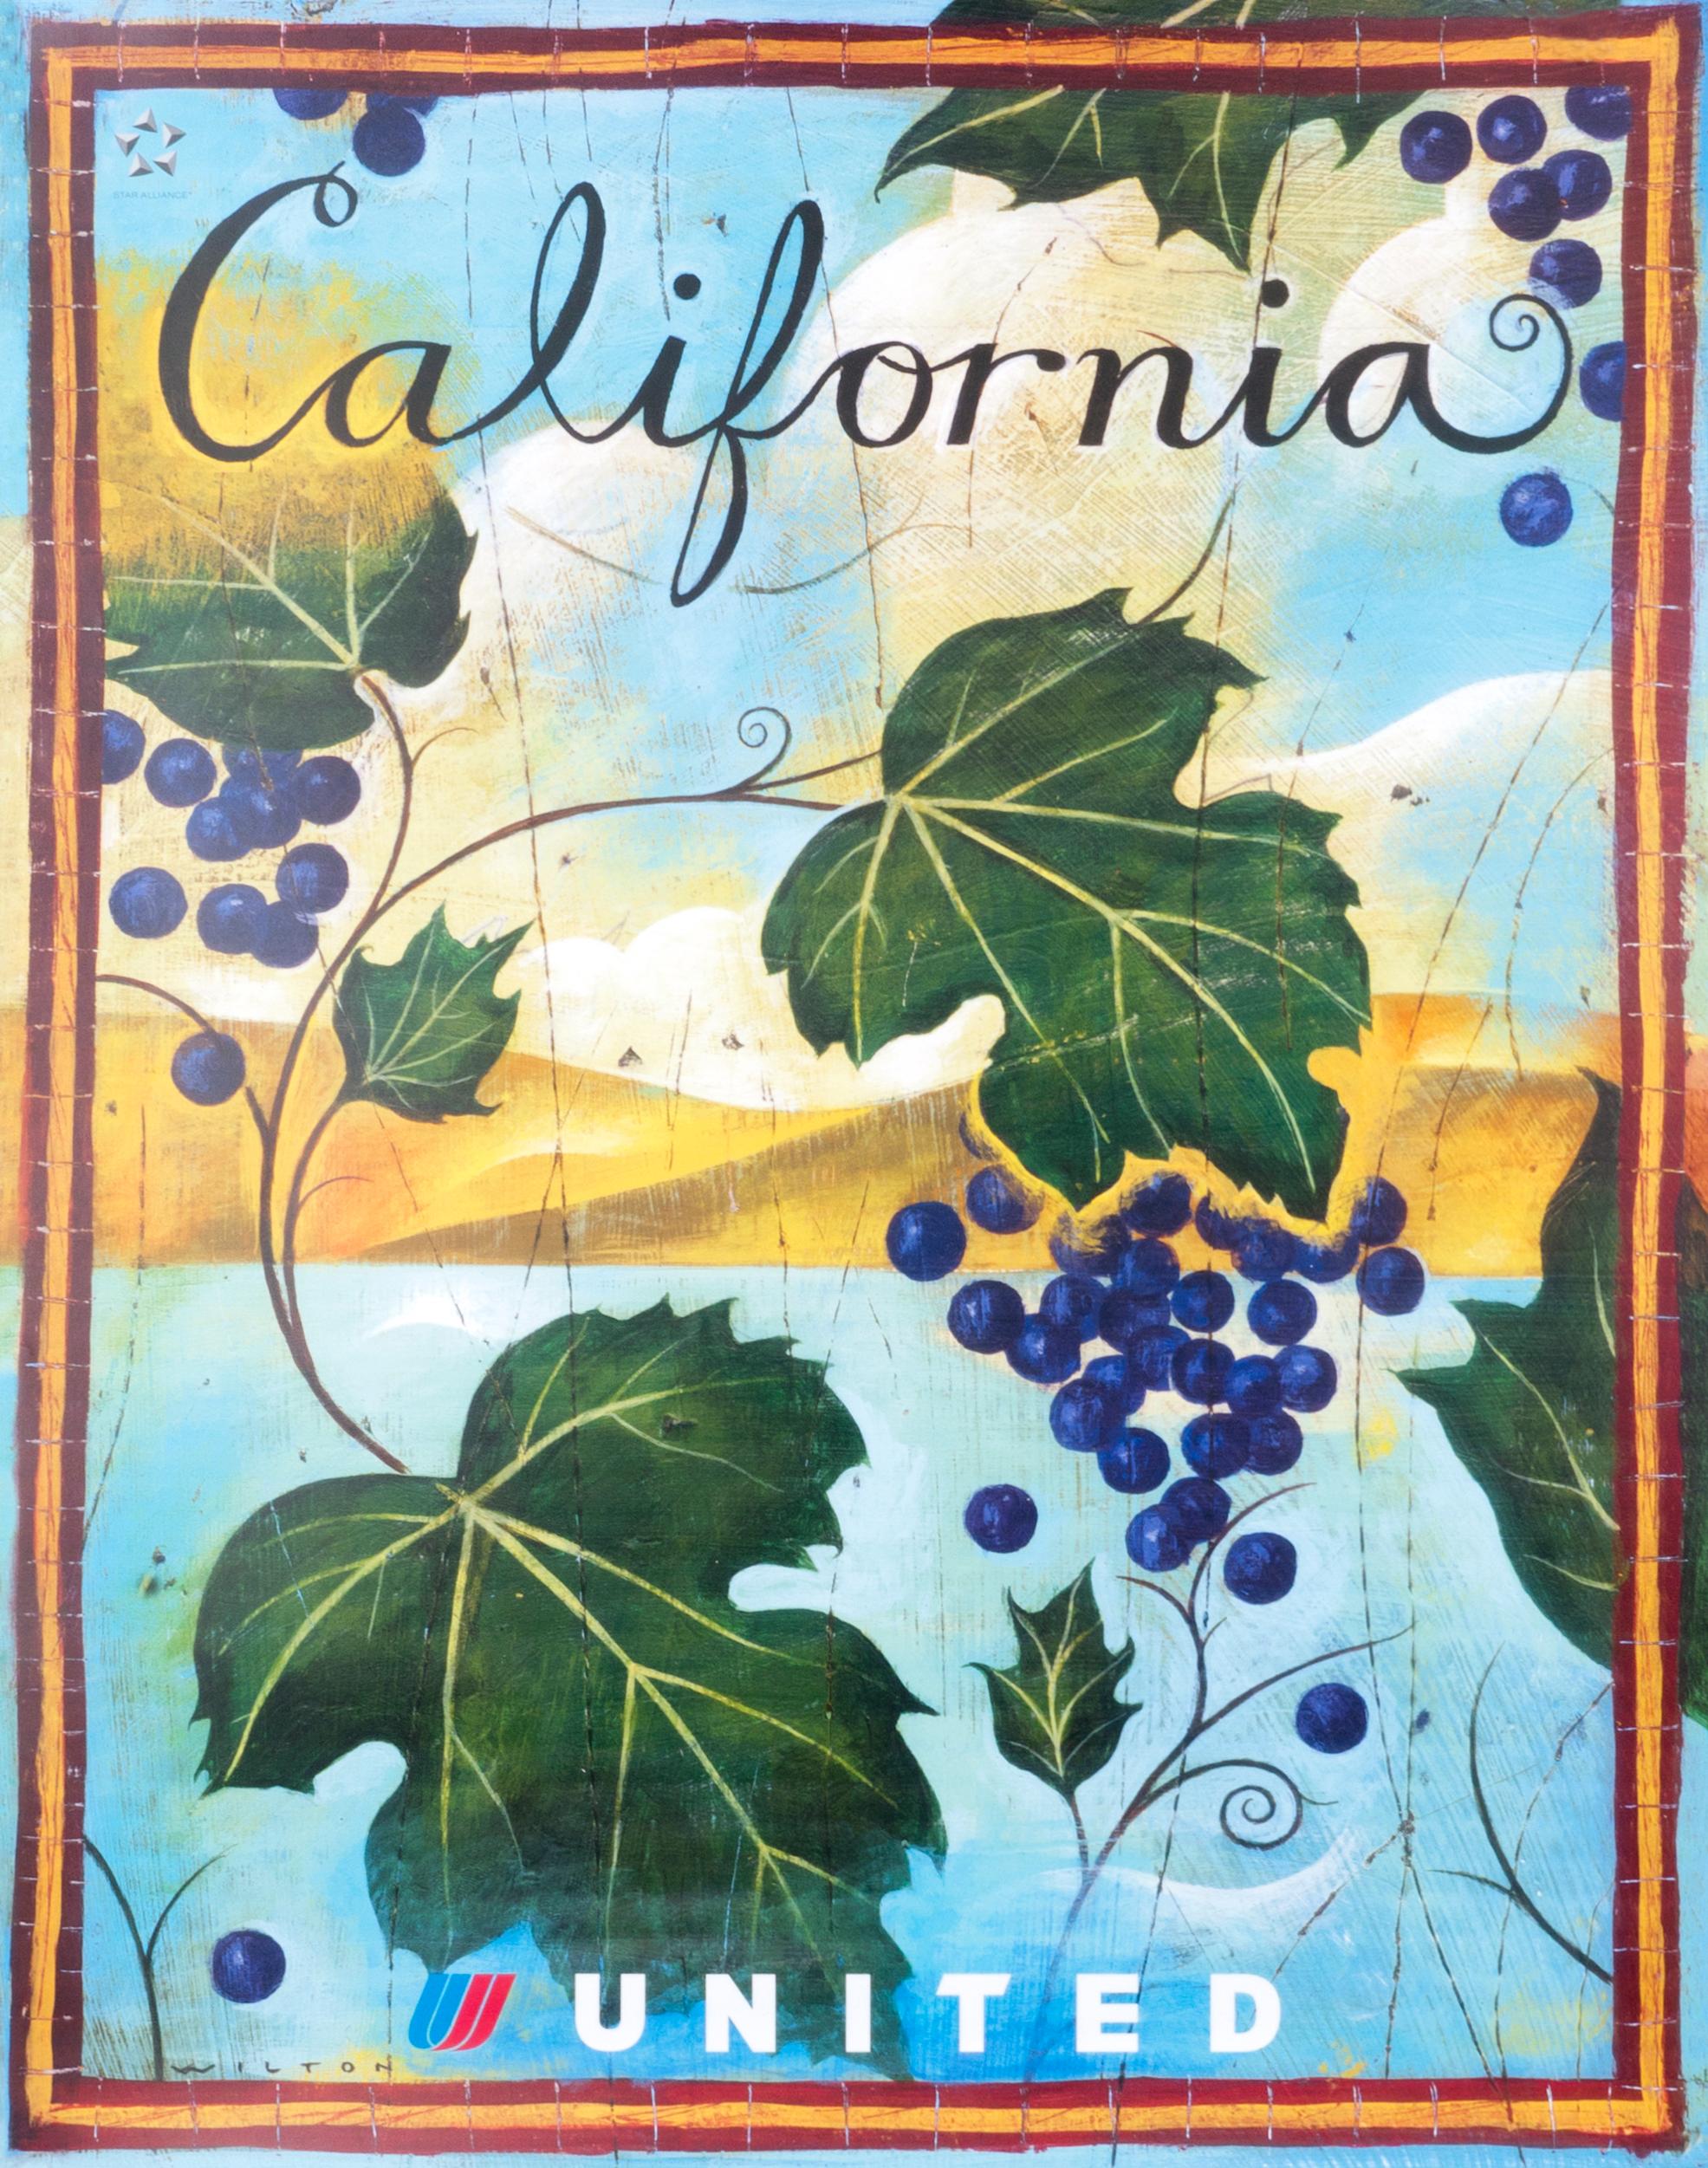 Nicholas Wilton Landscape Print - "California - United Airlines" Wine/Travel Original Poster